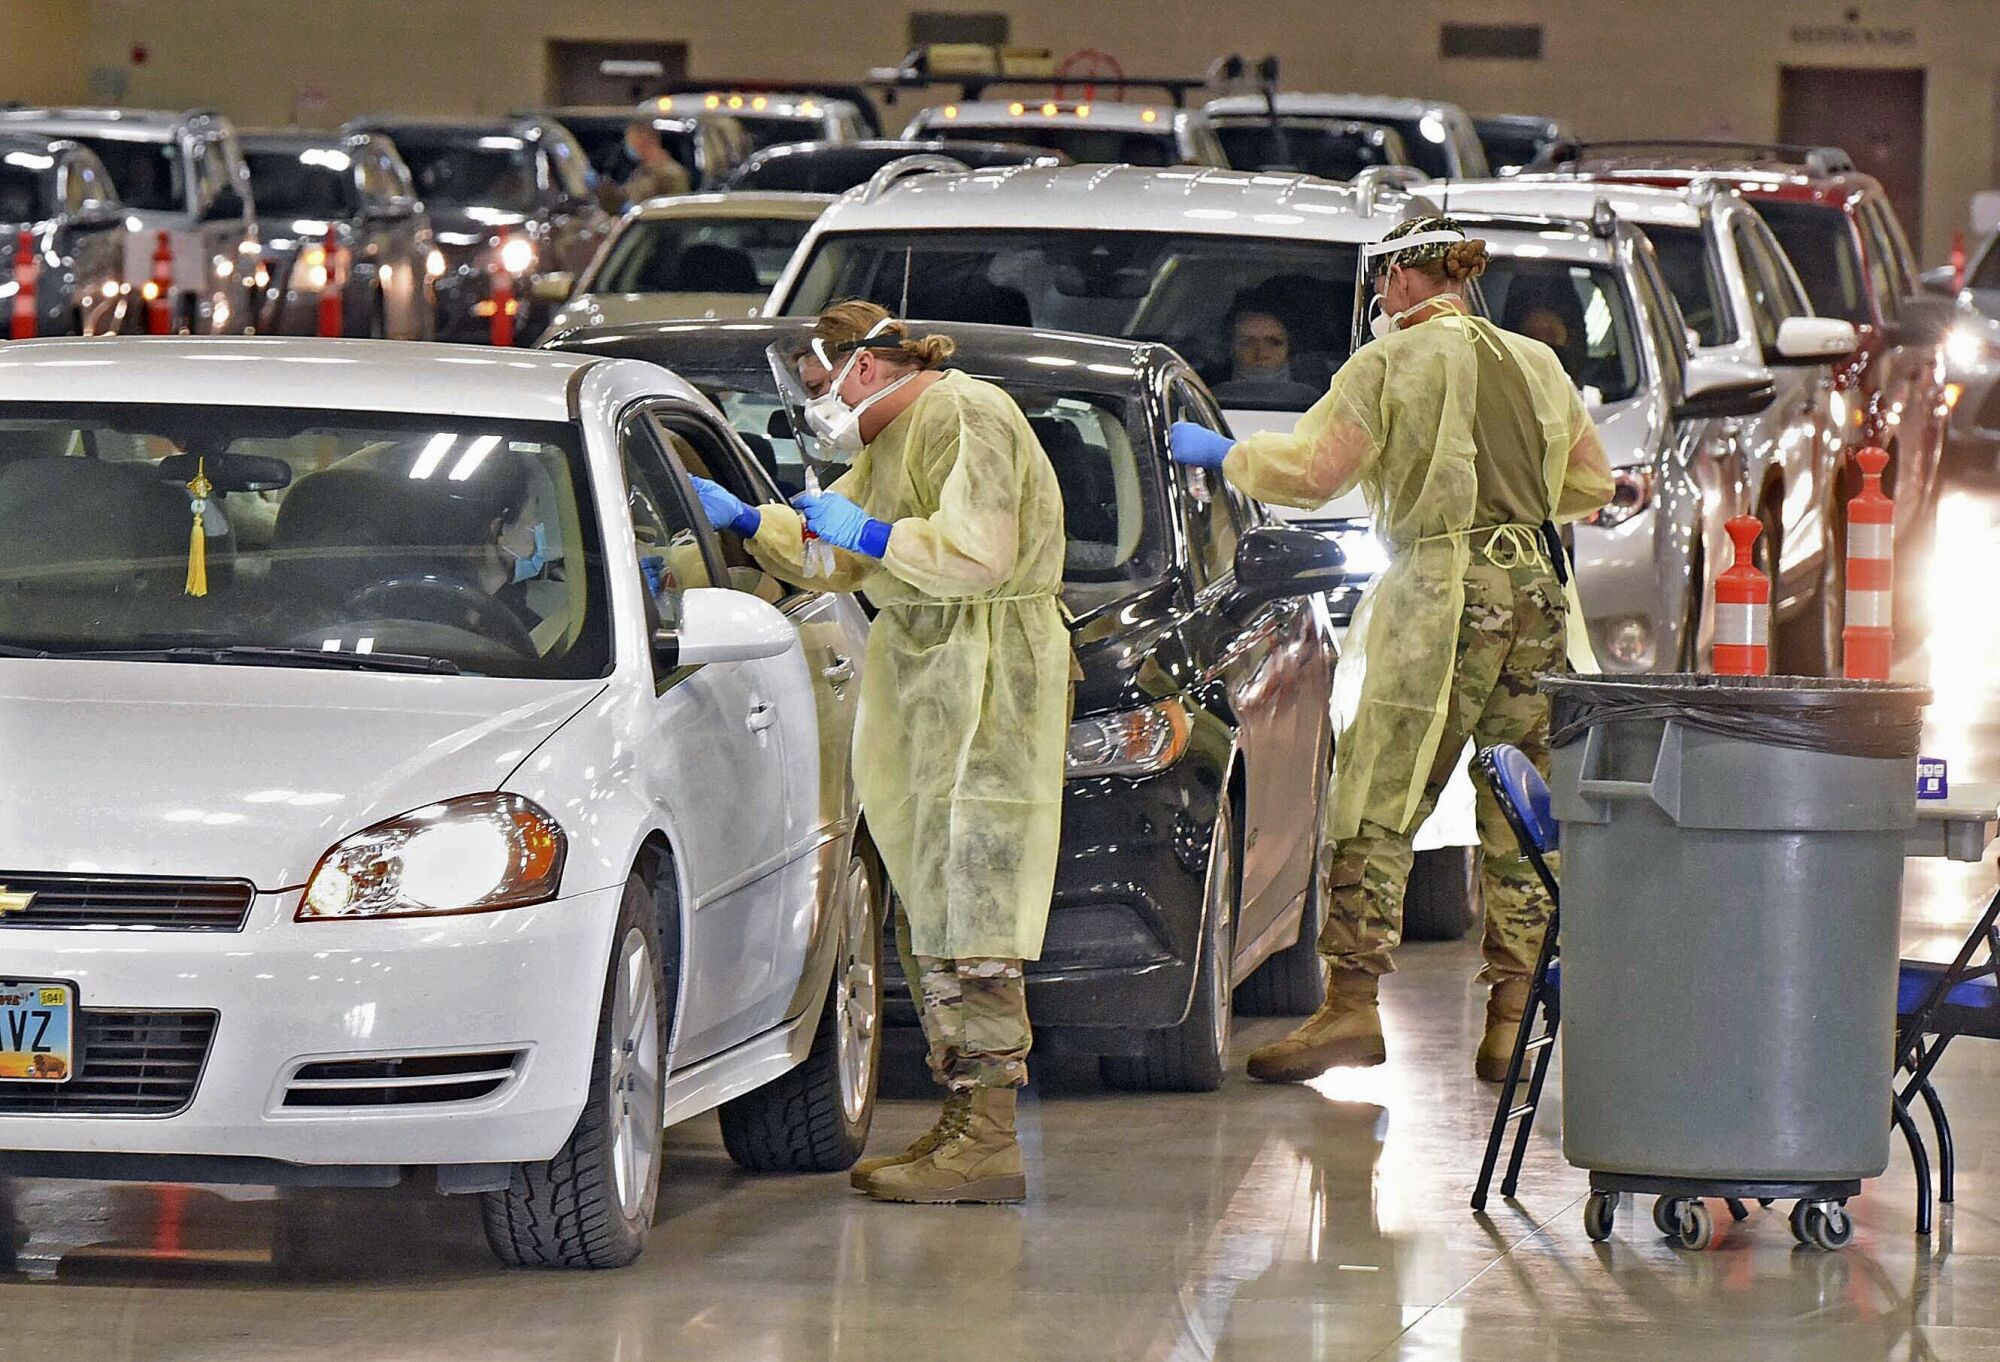 Workers administer coronavirus tests inside the Bismarck Events Center in Bismarck, N.D.